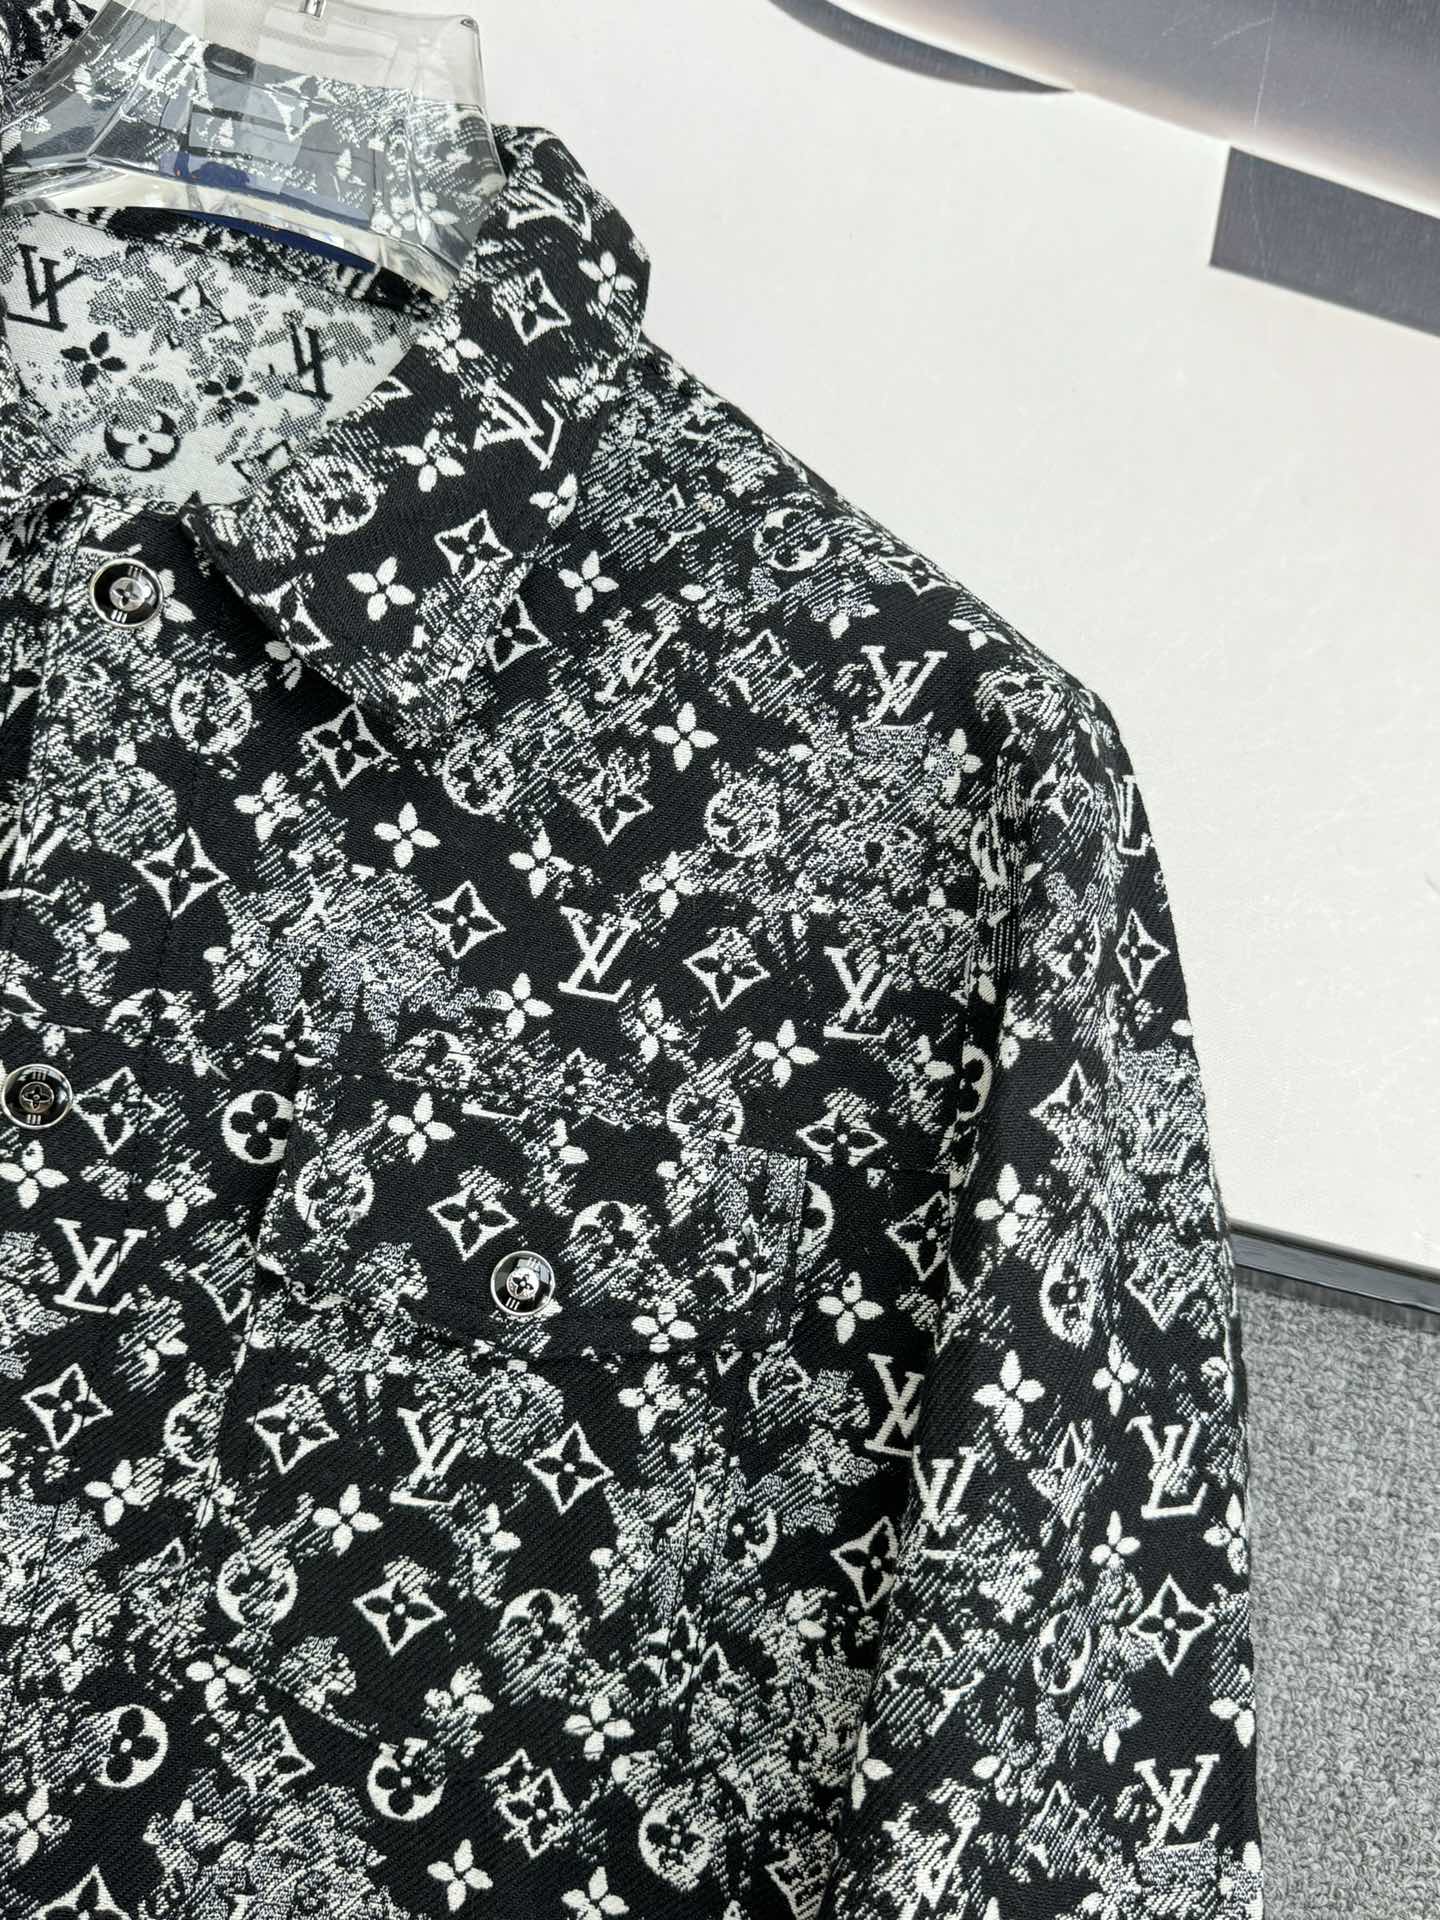 LV24SS早春新款-时尚潮流休闲外套小香风定制精梳双面料上身有型帅气颜色十分清晰非常的凸显整体的造型感